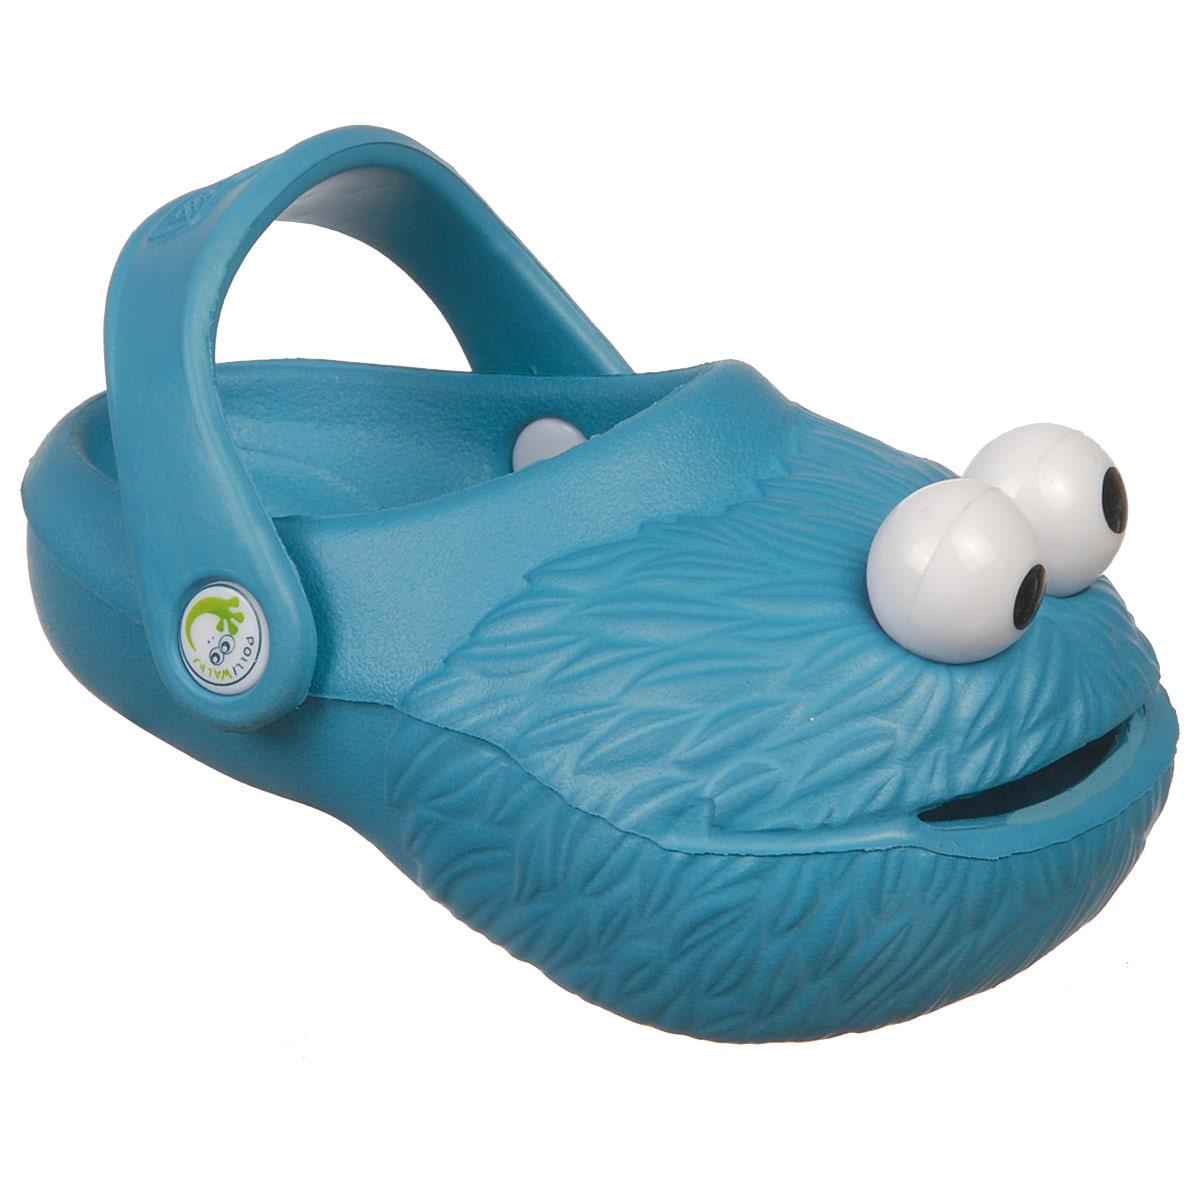 Polliwalks : Toddler shoes COOKIE MONSTER Blue # 10